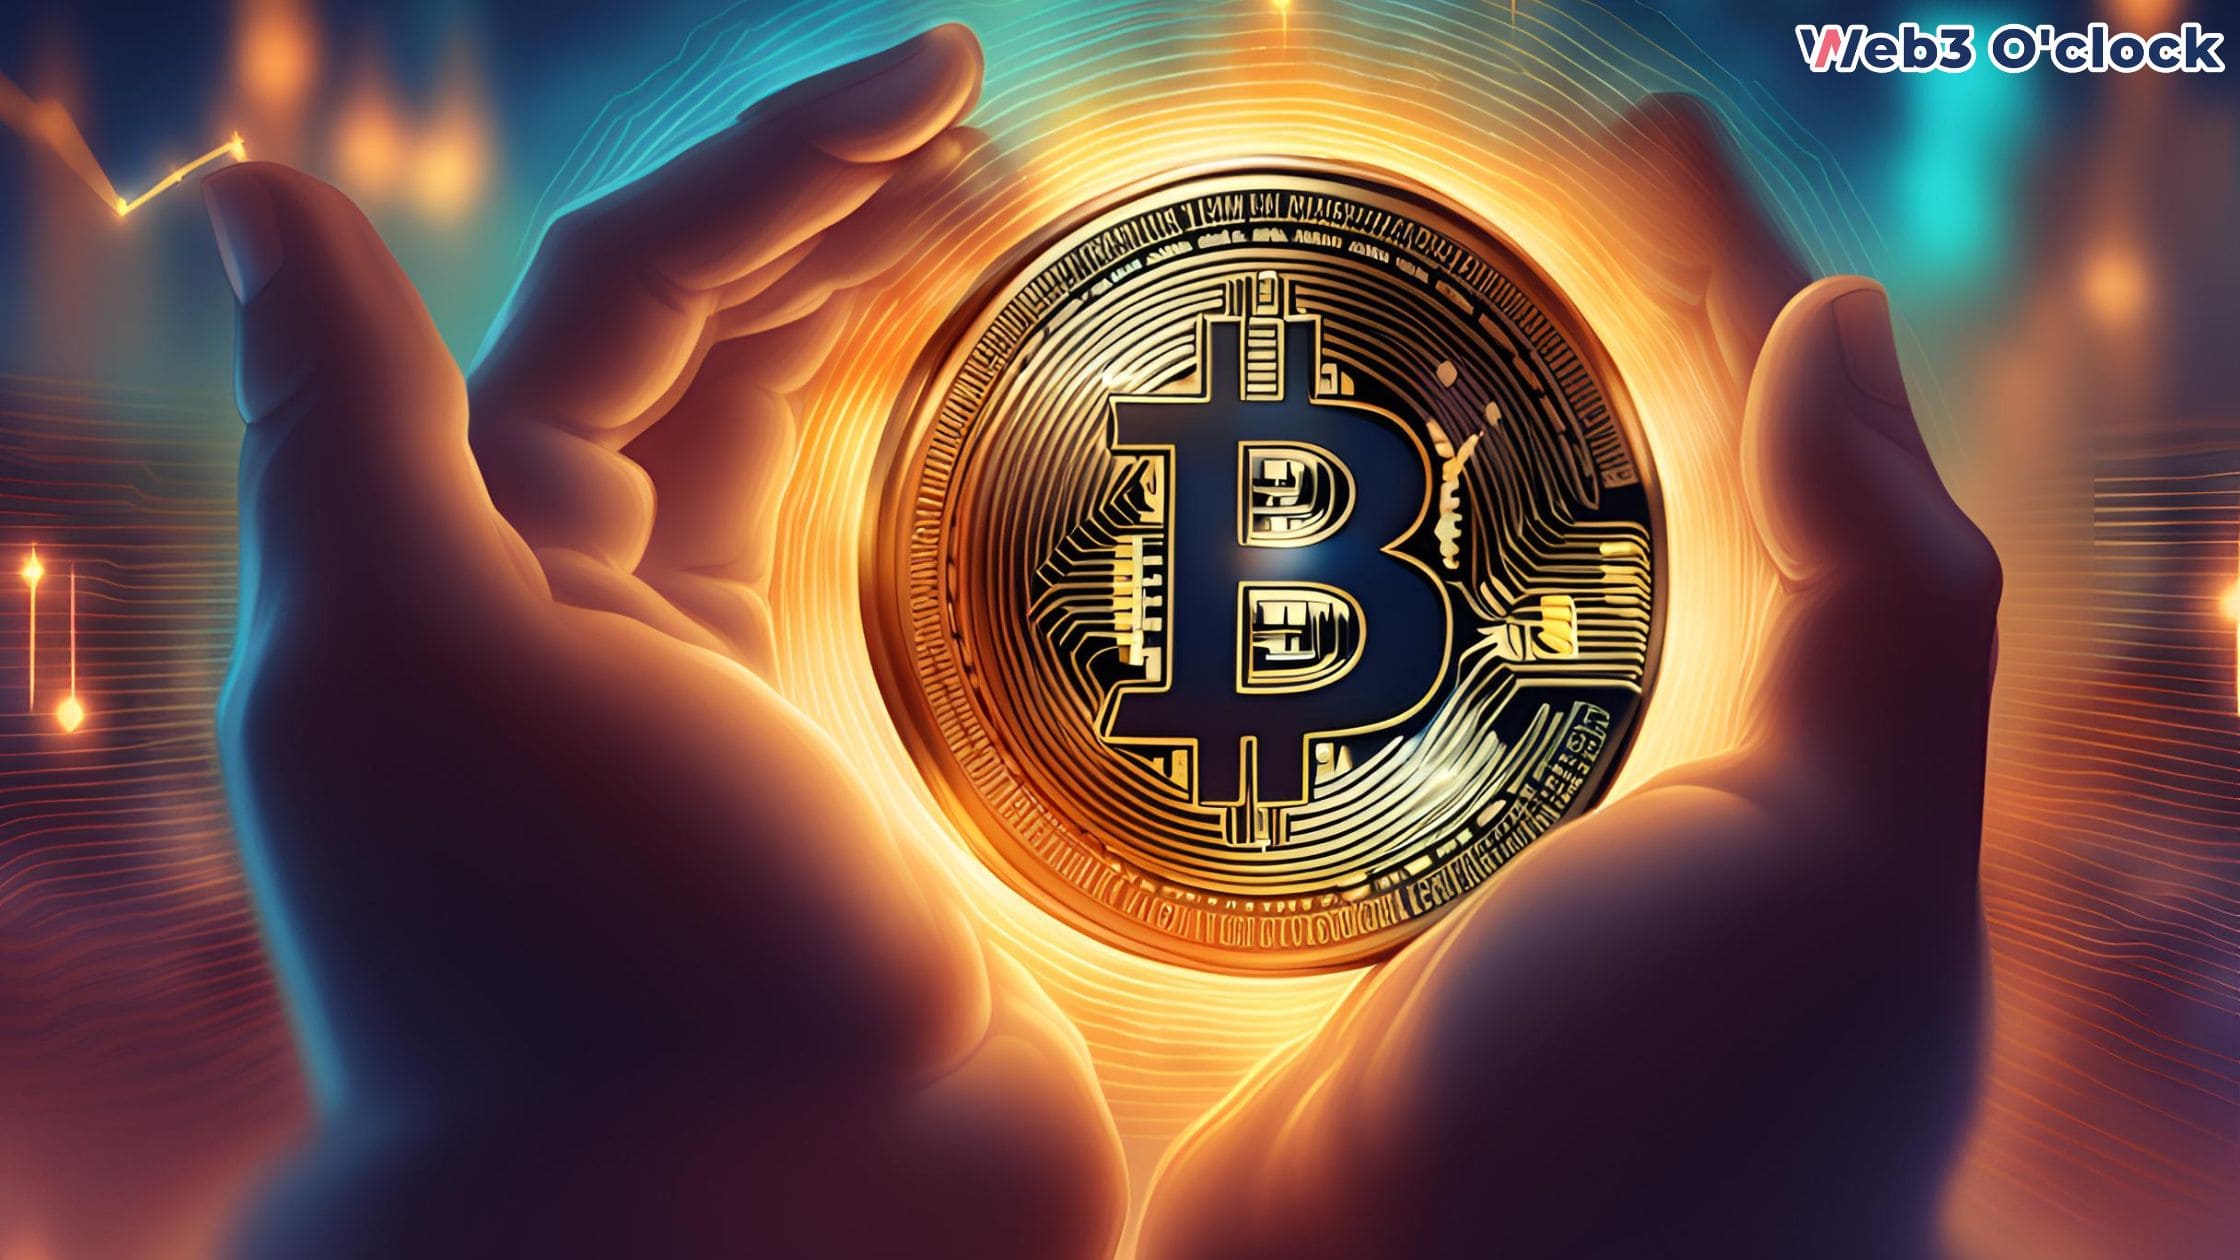 Big News for Bitcoin by web3 o'clock